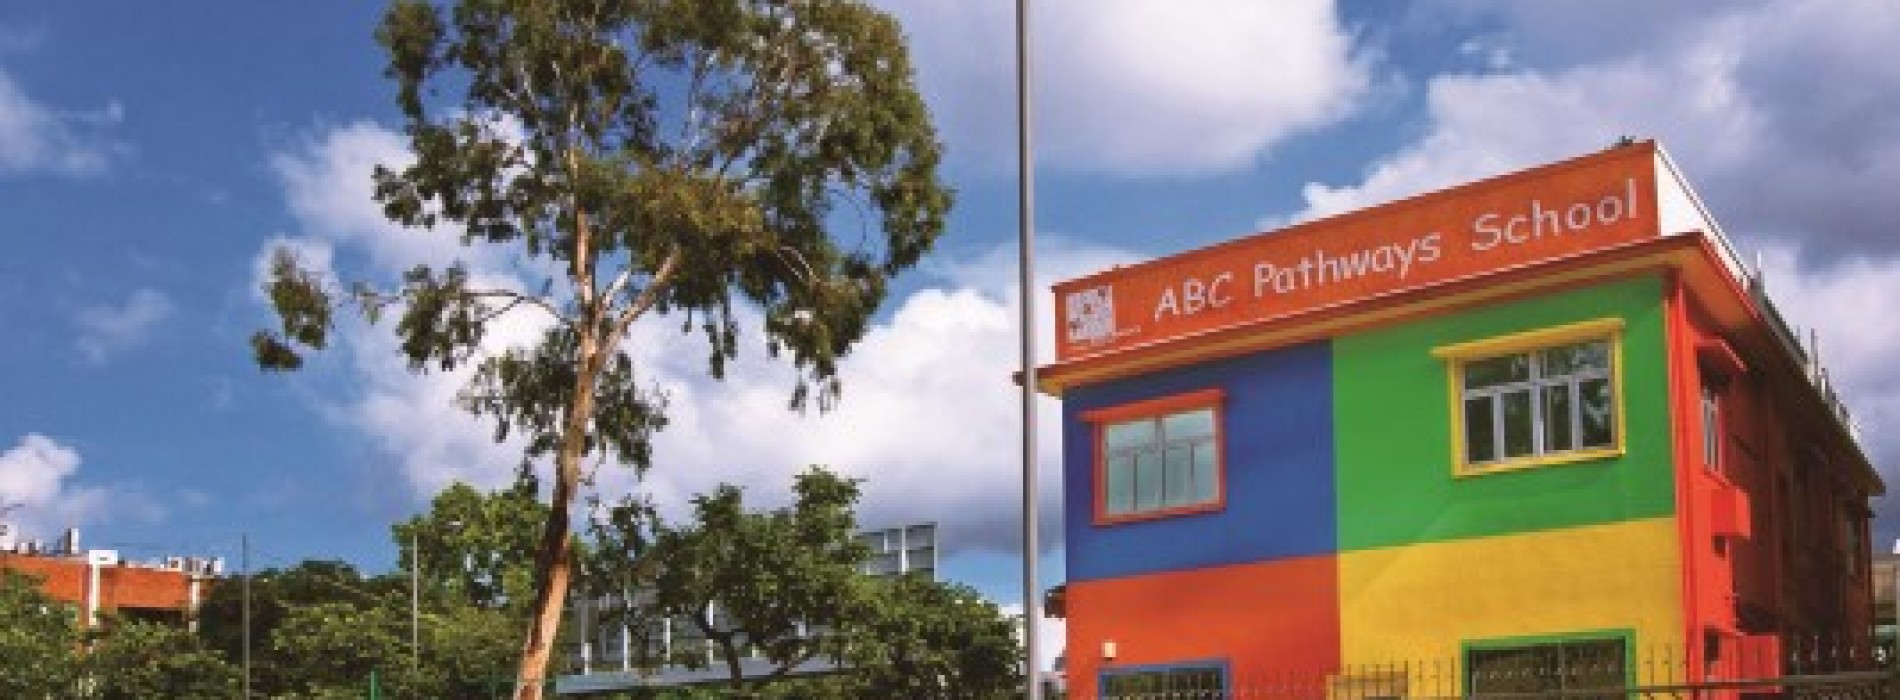 ABC Pathways School(黃埔分校)